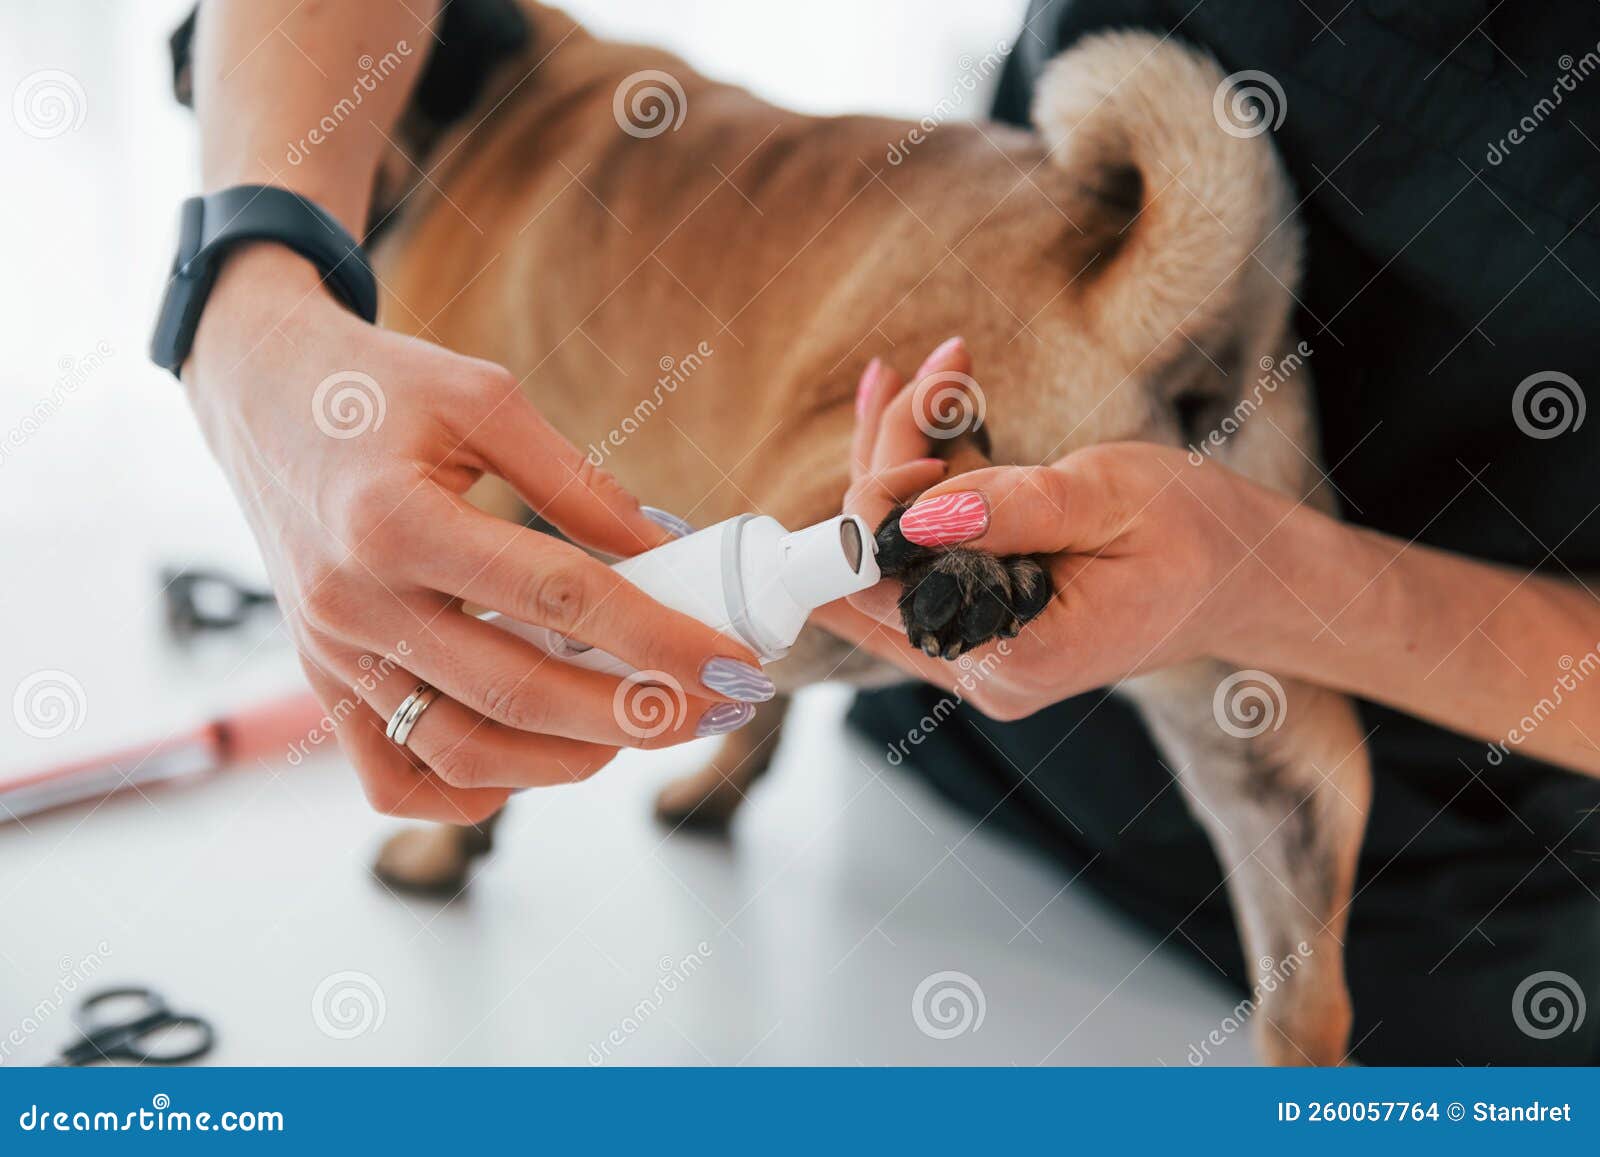 Pug Hates Getting Nails Clipped | TikTok